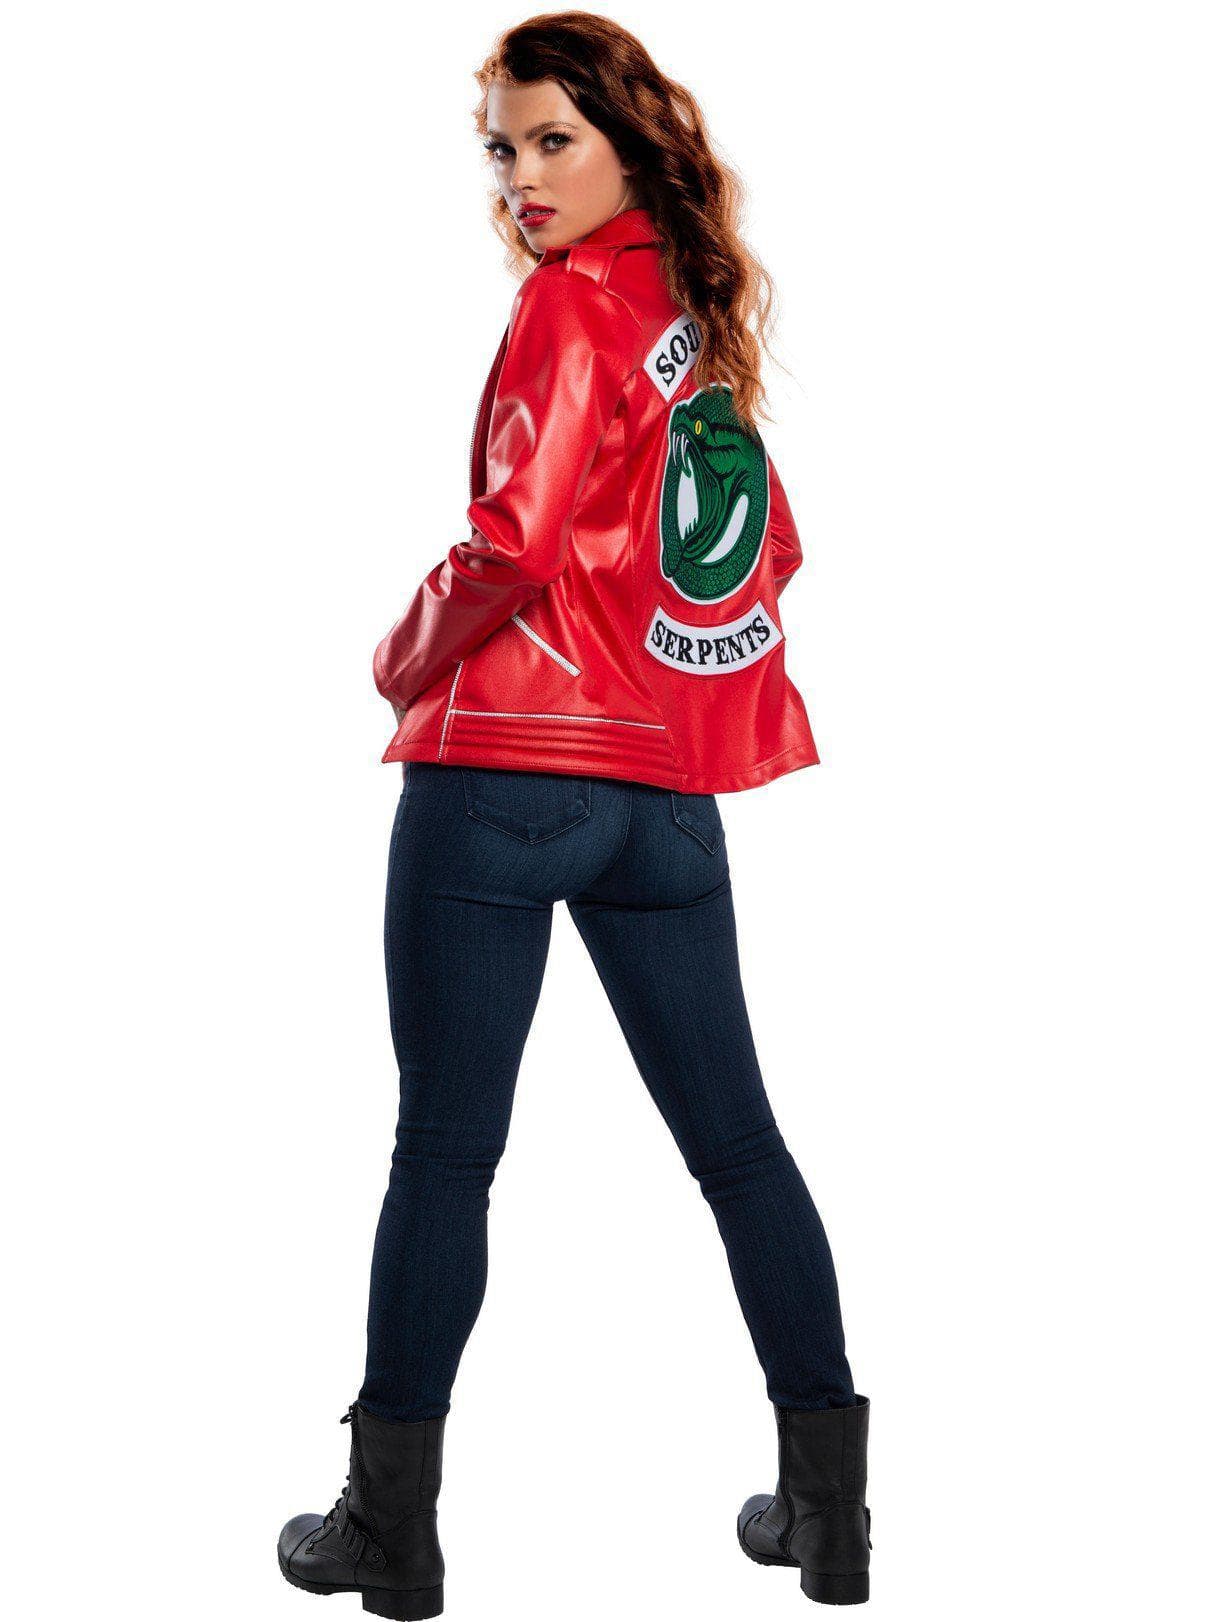 Adult Riverdale Cherry Blossom Jacket - costumes.com